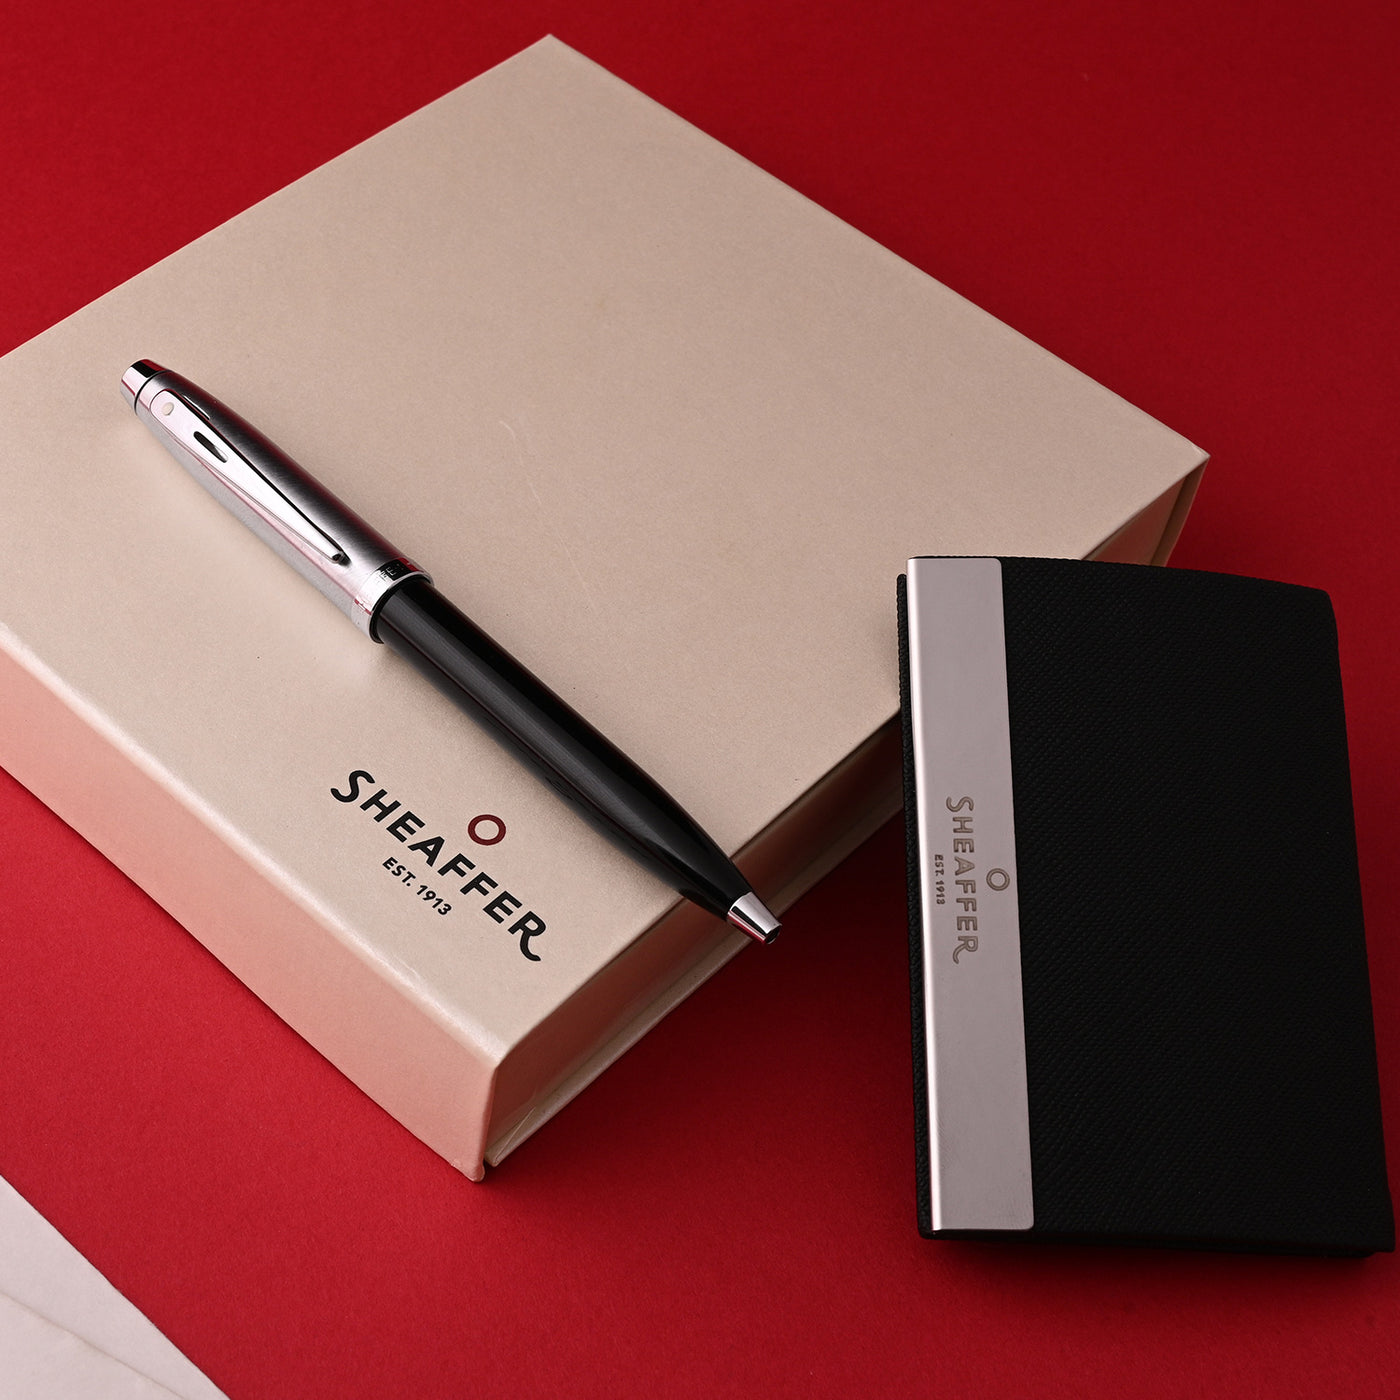 Sheaffer Gift Set - 100 Series Black & Brushed Chrome Ball Pen with Card Holder 1